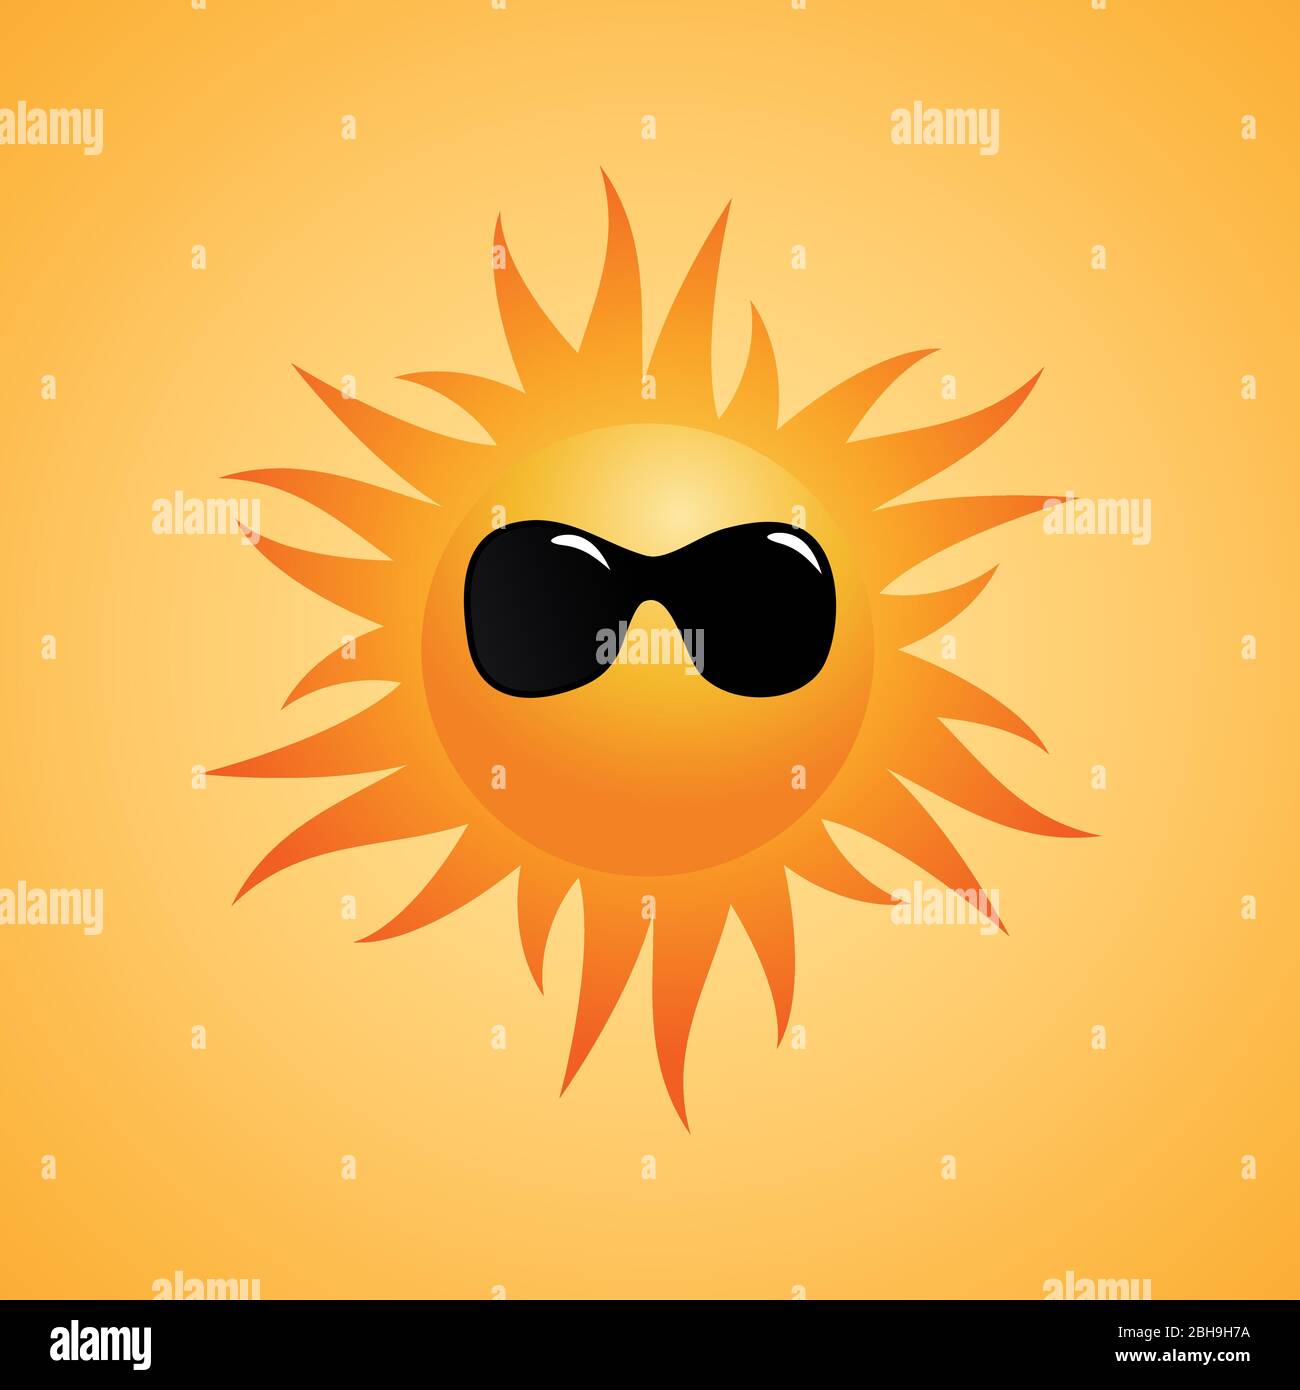 Summer Sun Face with Sunglasses Vector Icon Stock Vector - Illustration of  summer, light: 120457111